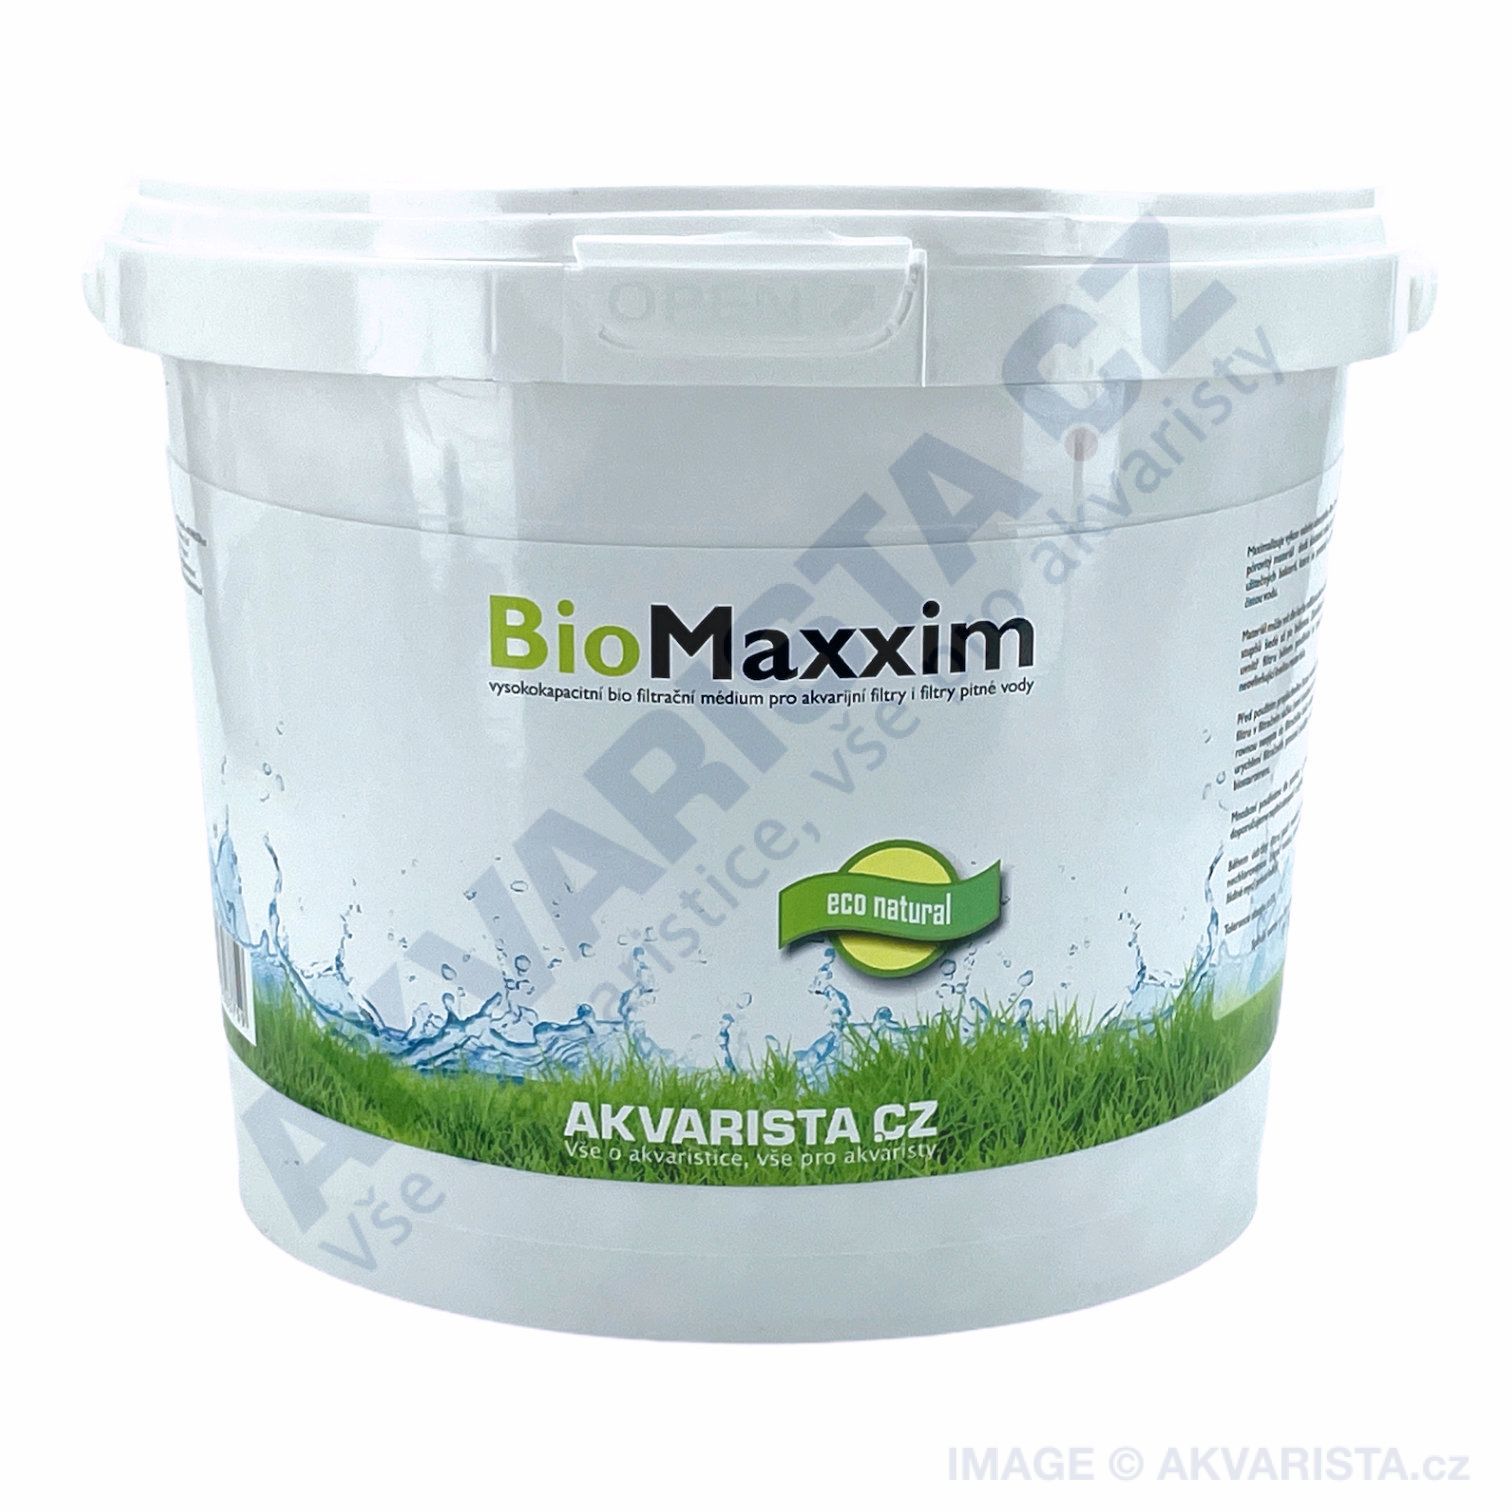 AKVARISTA.cz BioMaxxim filtrační médium 3000 ml